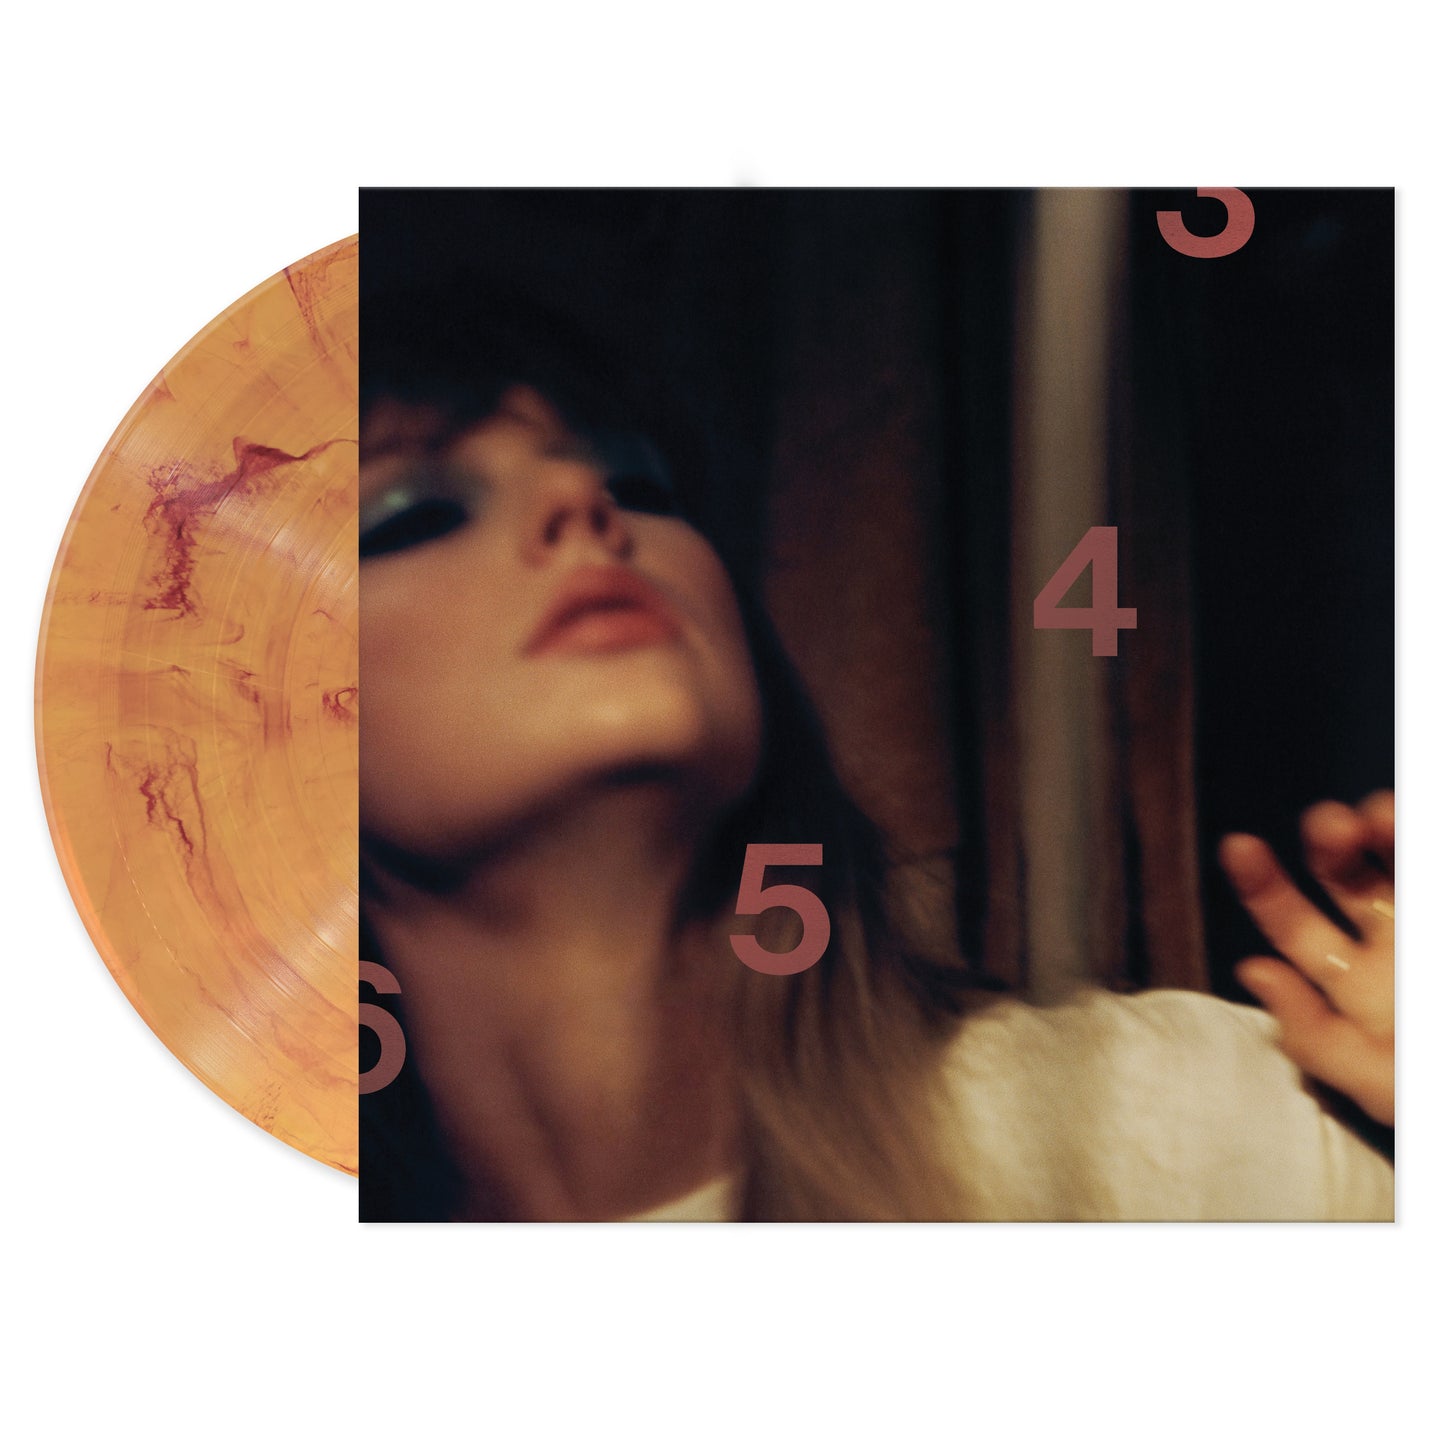 Taylor Swift - Midnights (LP | Marbled Blood Moon Edition Vinyl)